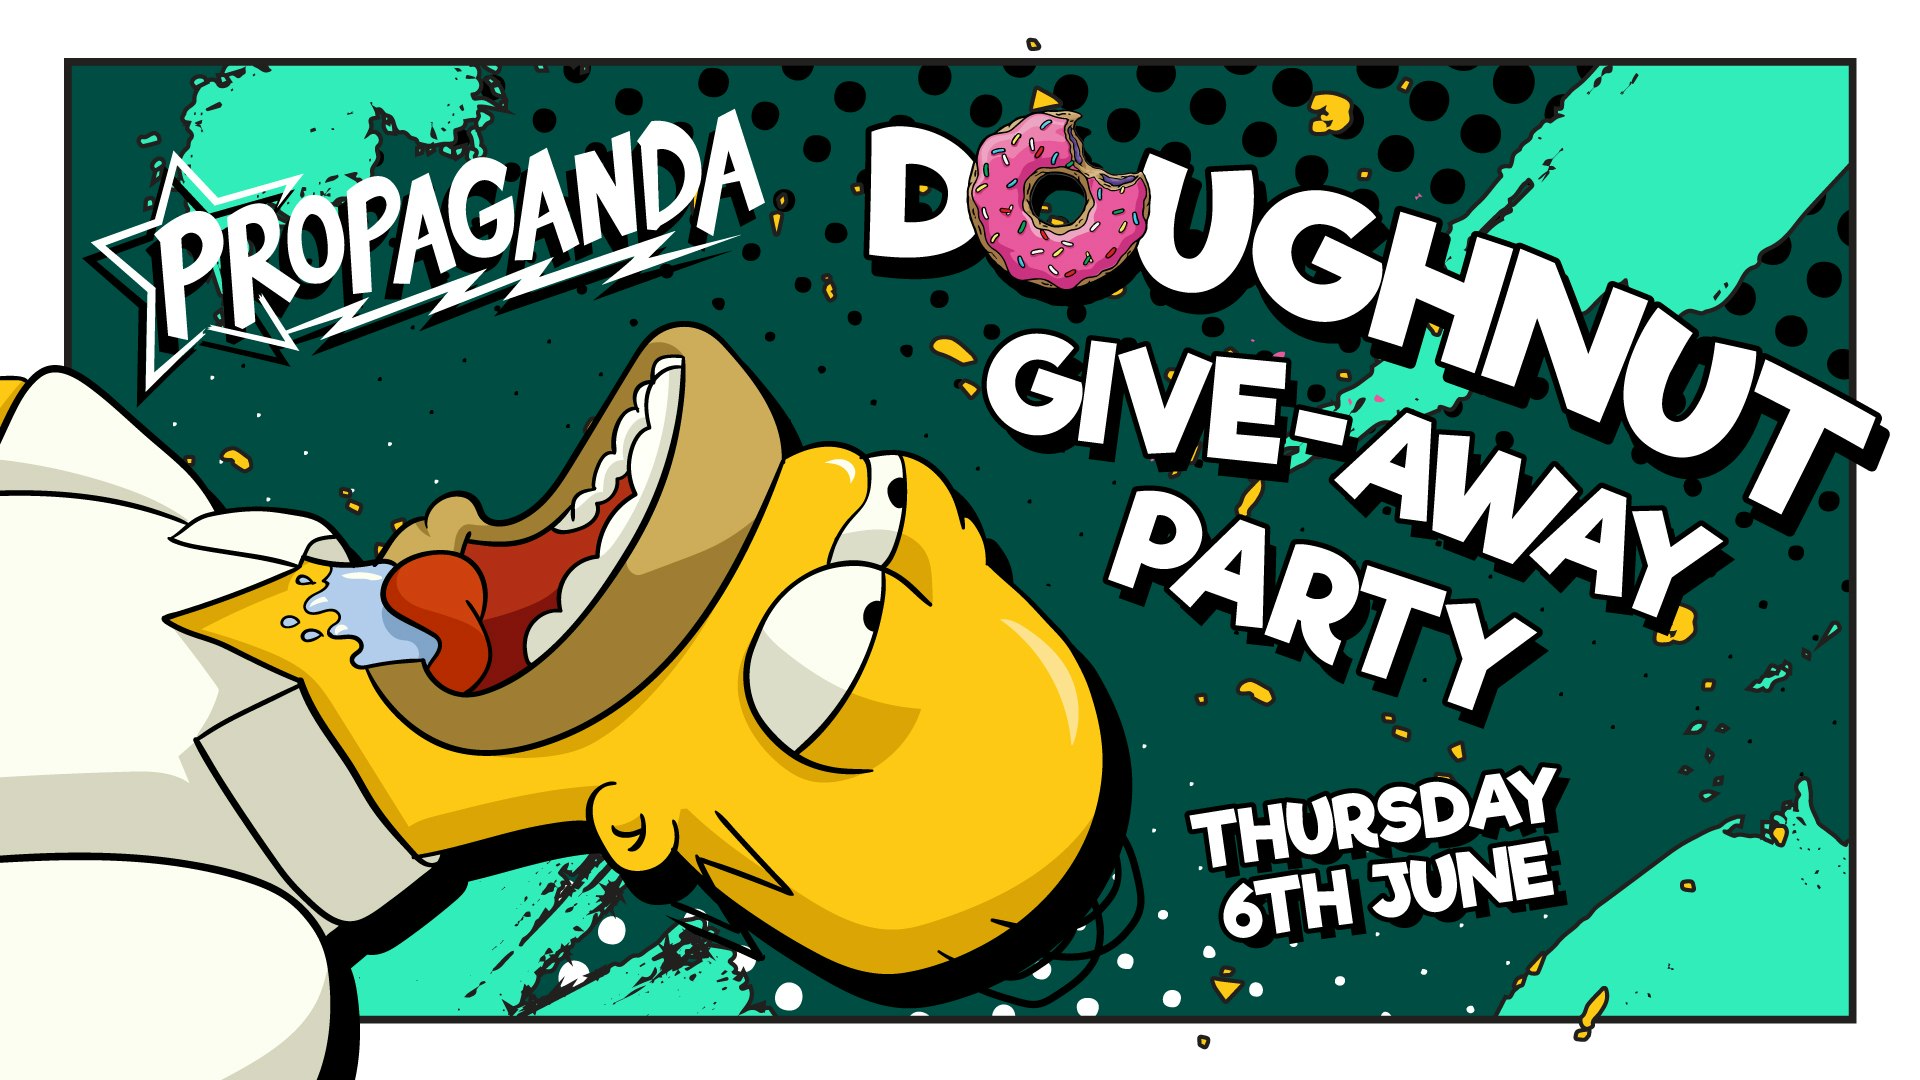 Propaganda Cheltenham – Doughnut Party